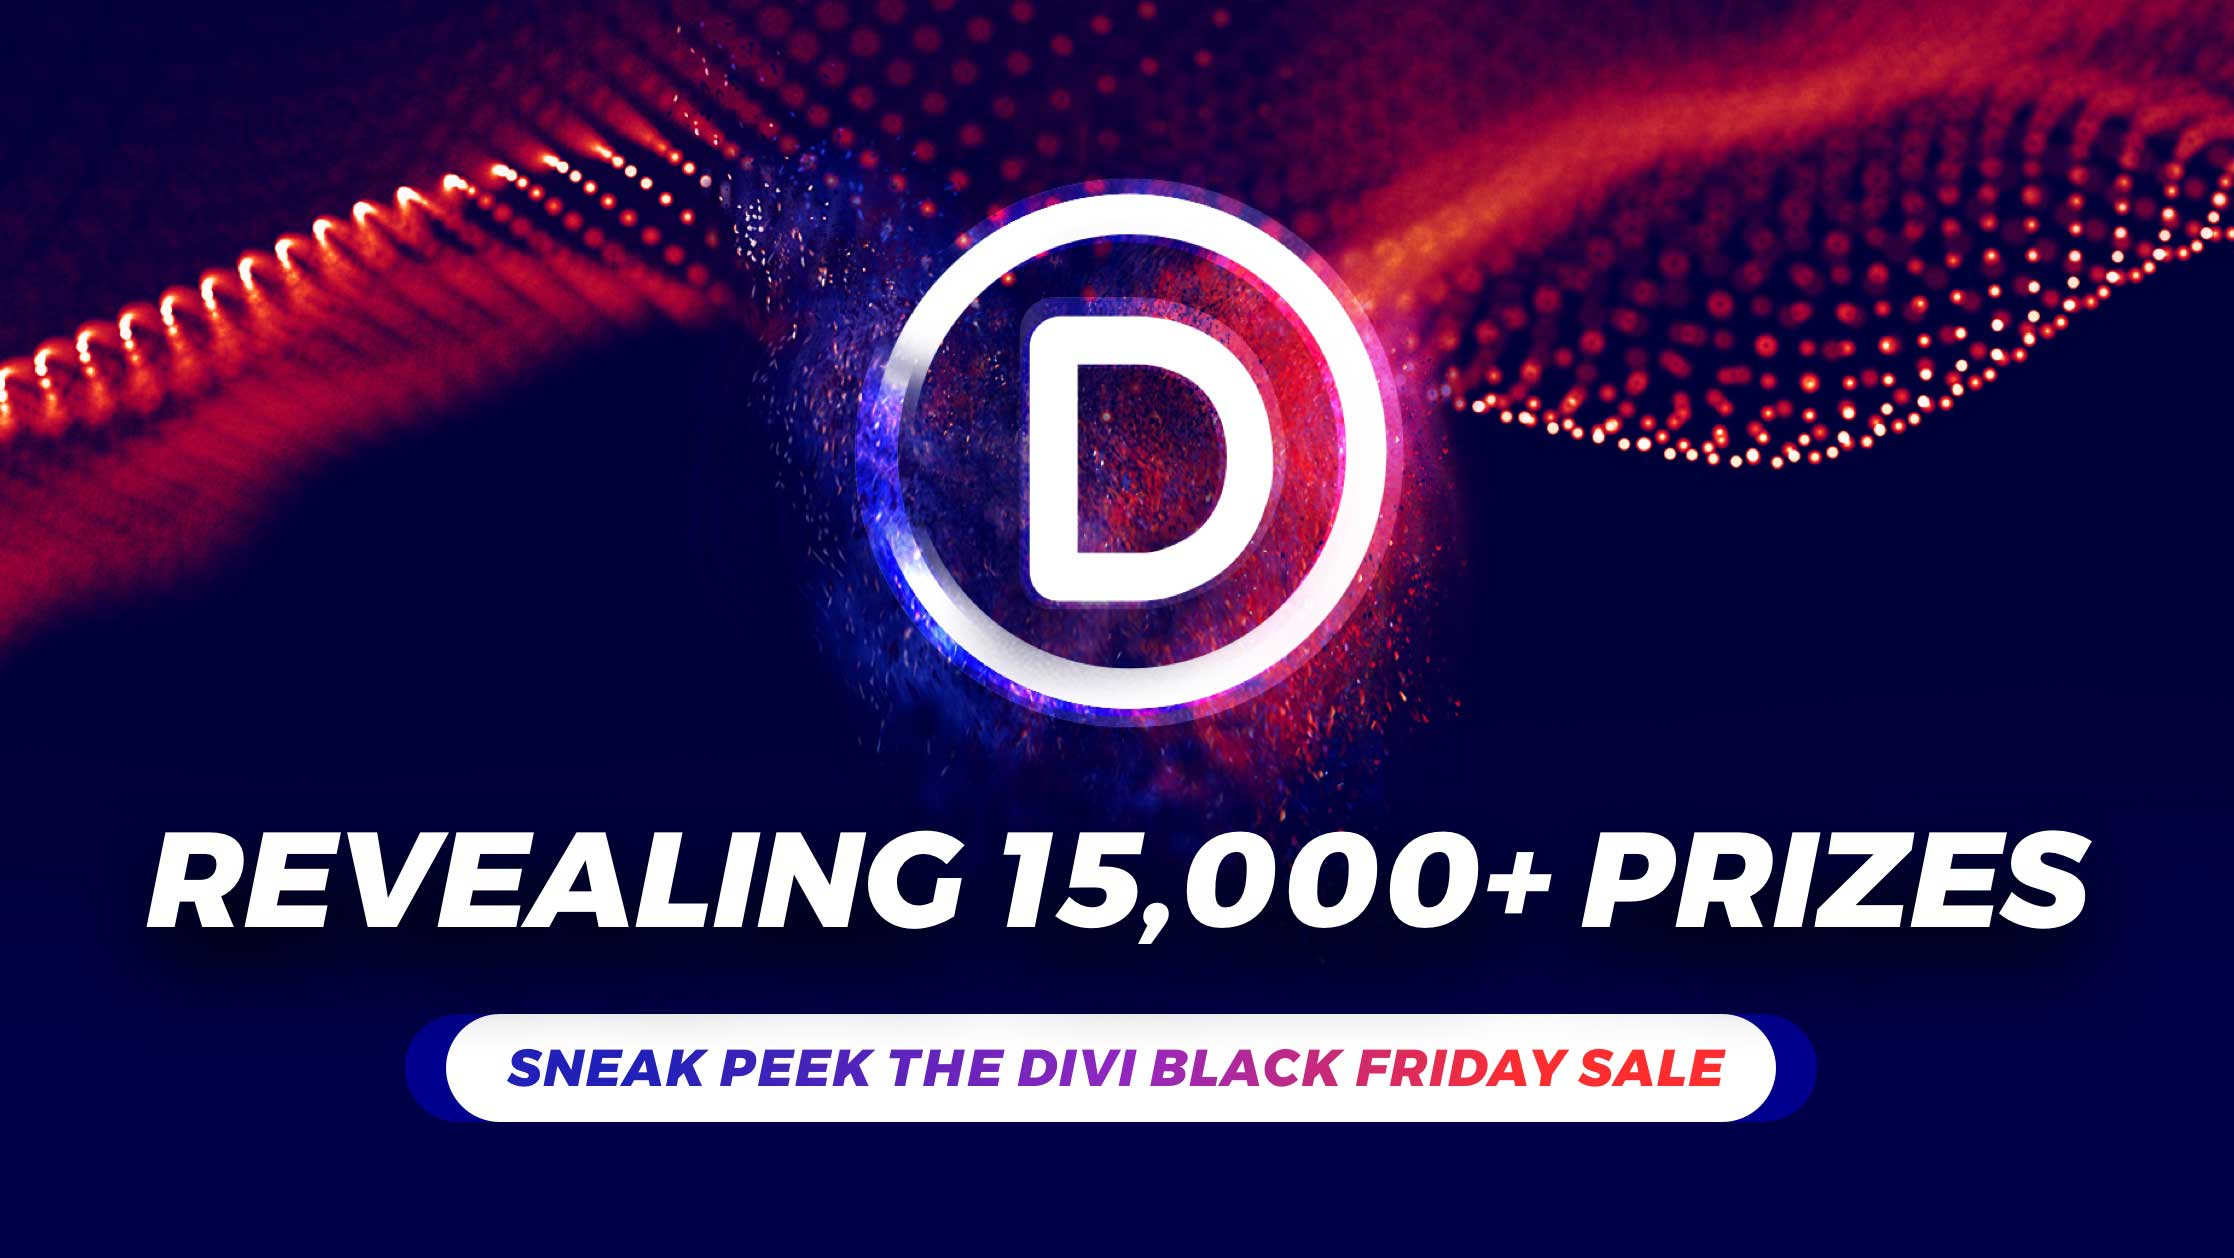 Revealing 15,000+ Free Divi Black Friday Prizes Worth $800,000!